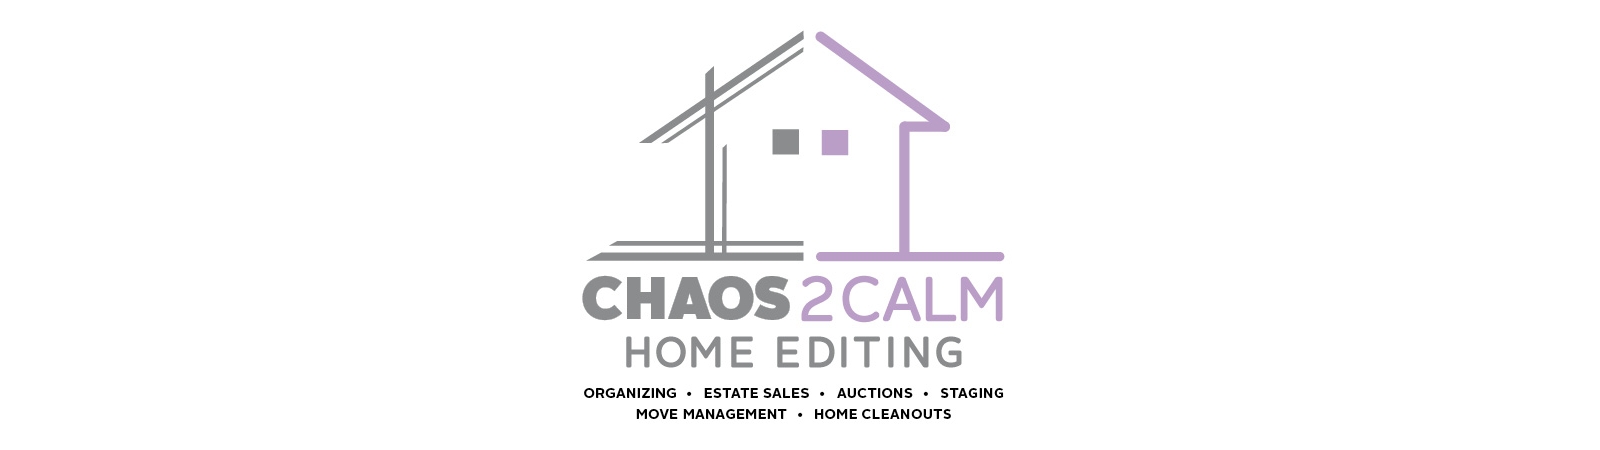 Chaos2Calm Home Editing | AuctionNinja